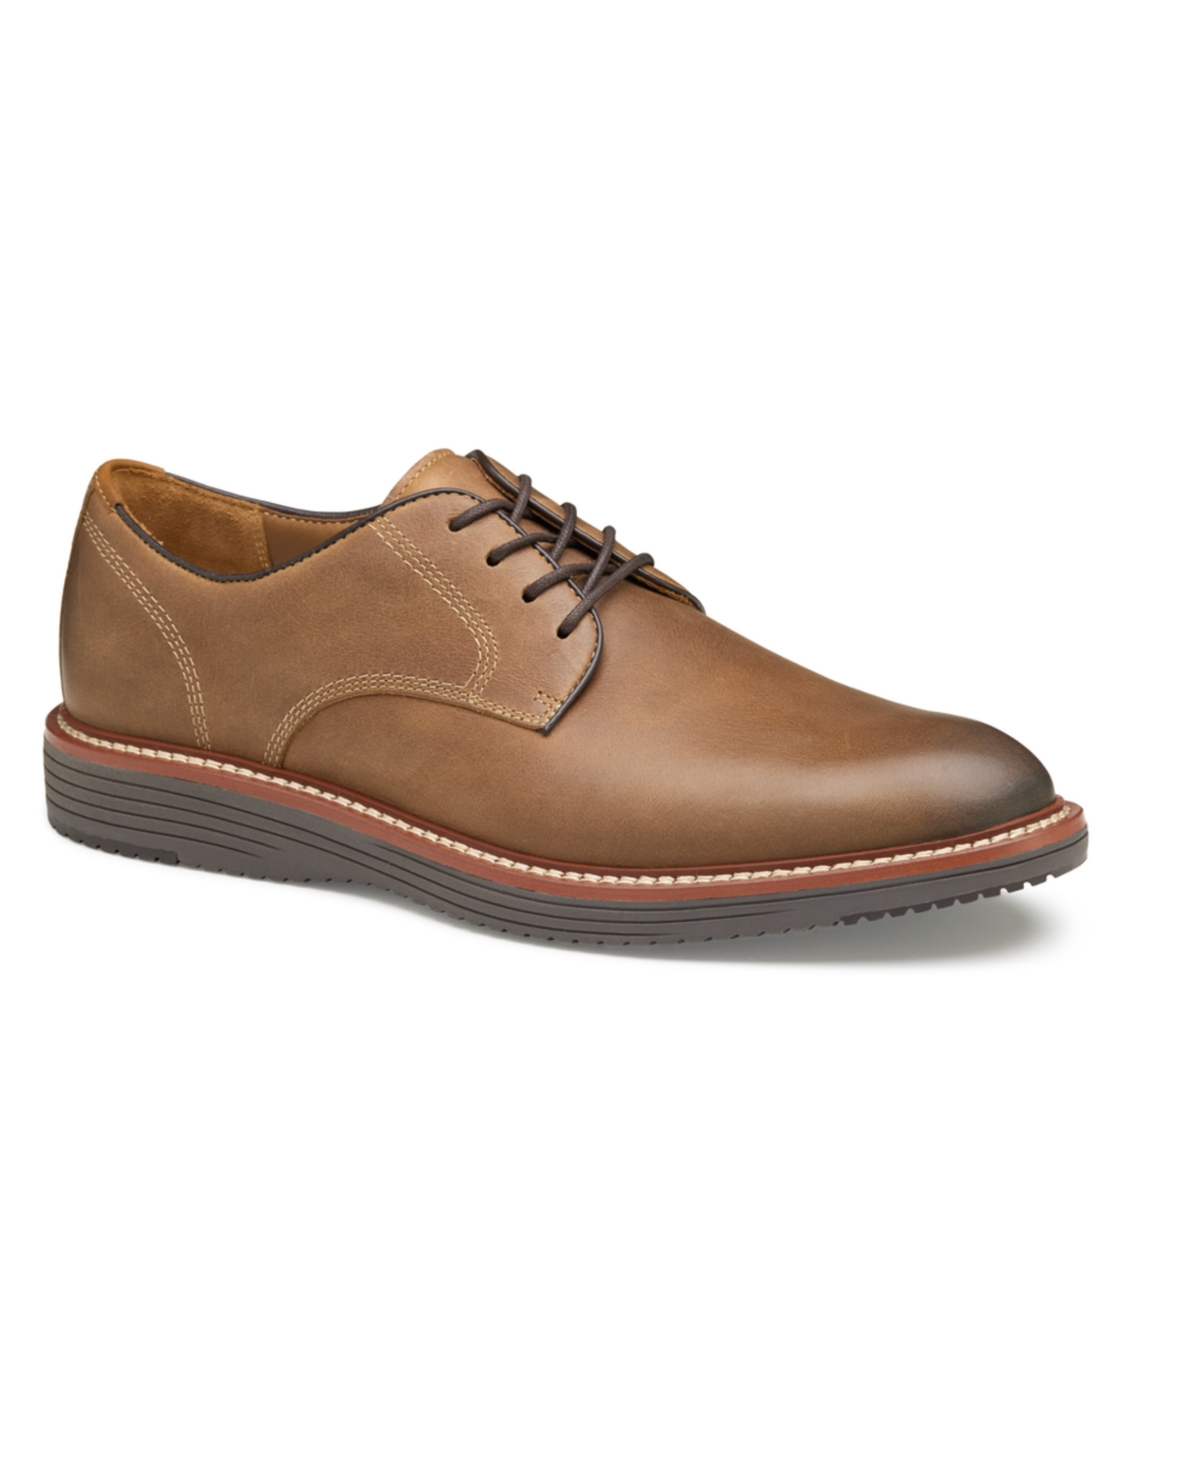 Johnston & Murphy Men's Upton Plain Toe Oxfords Men's Shoes